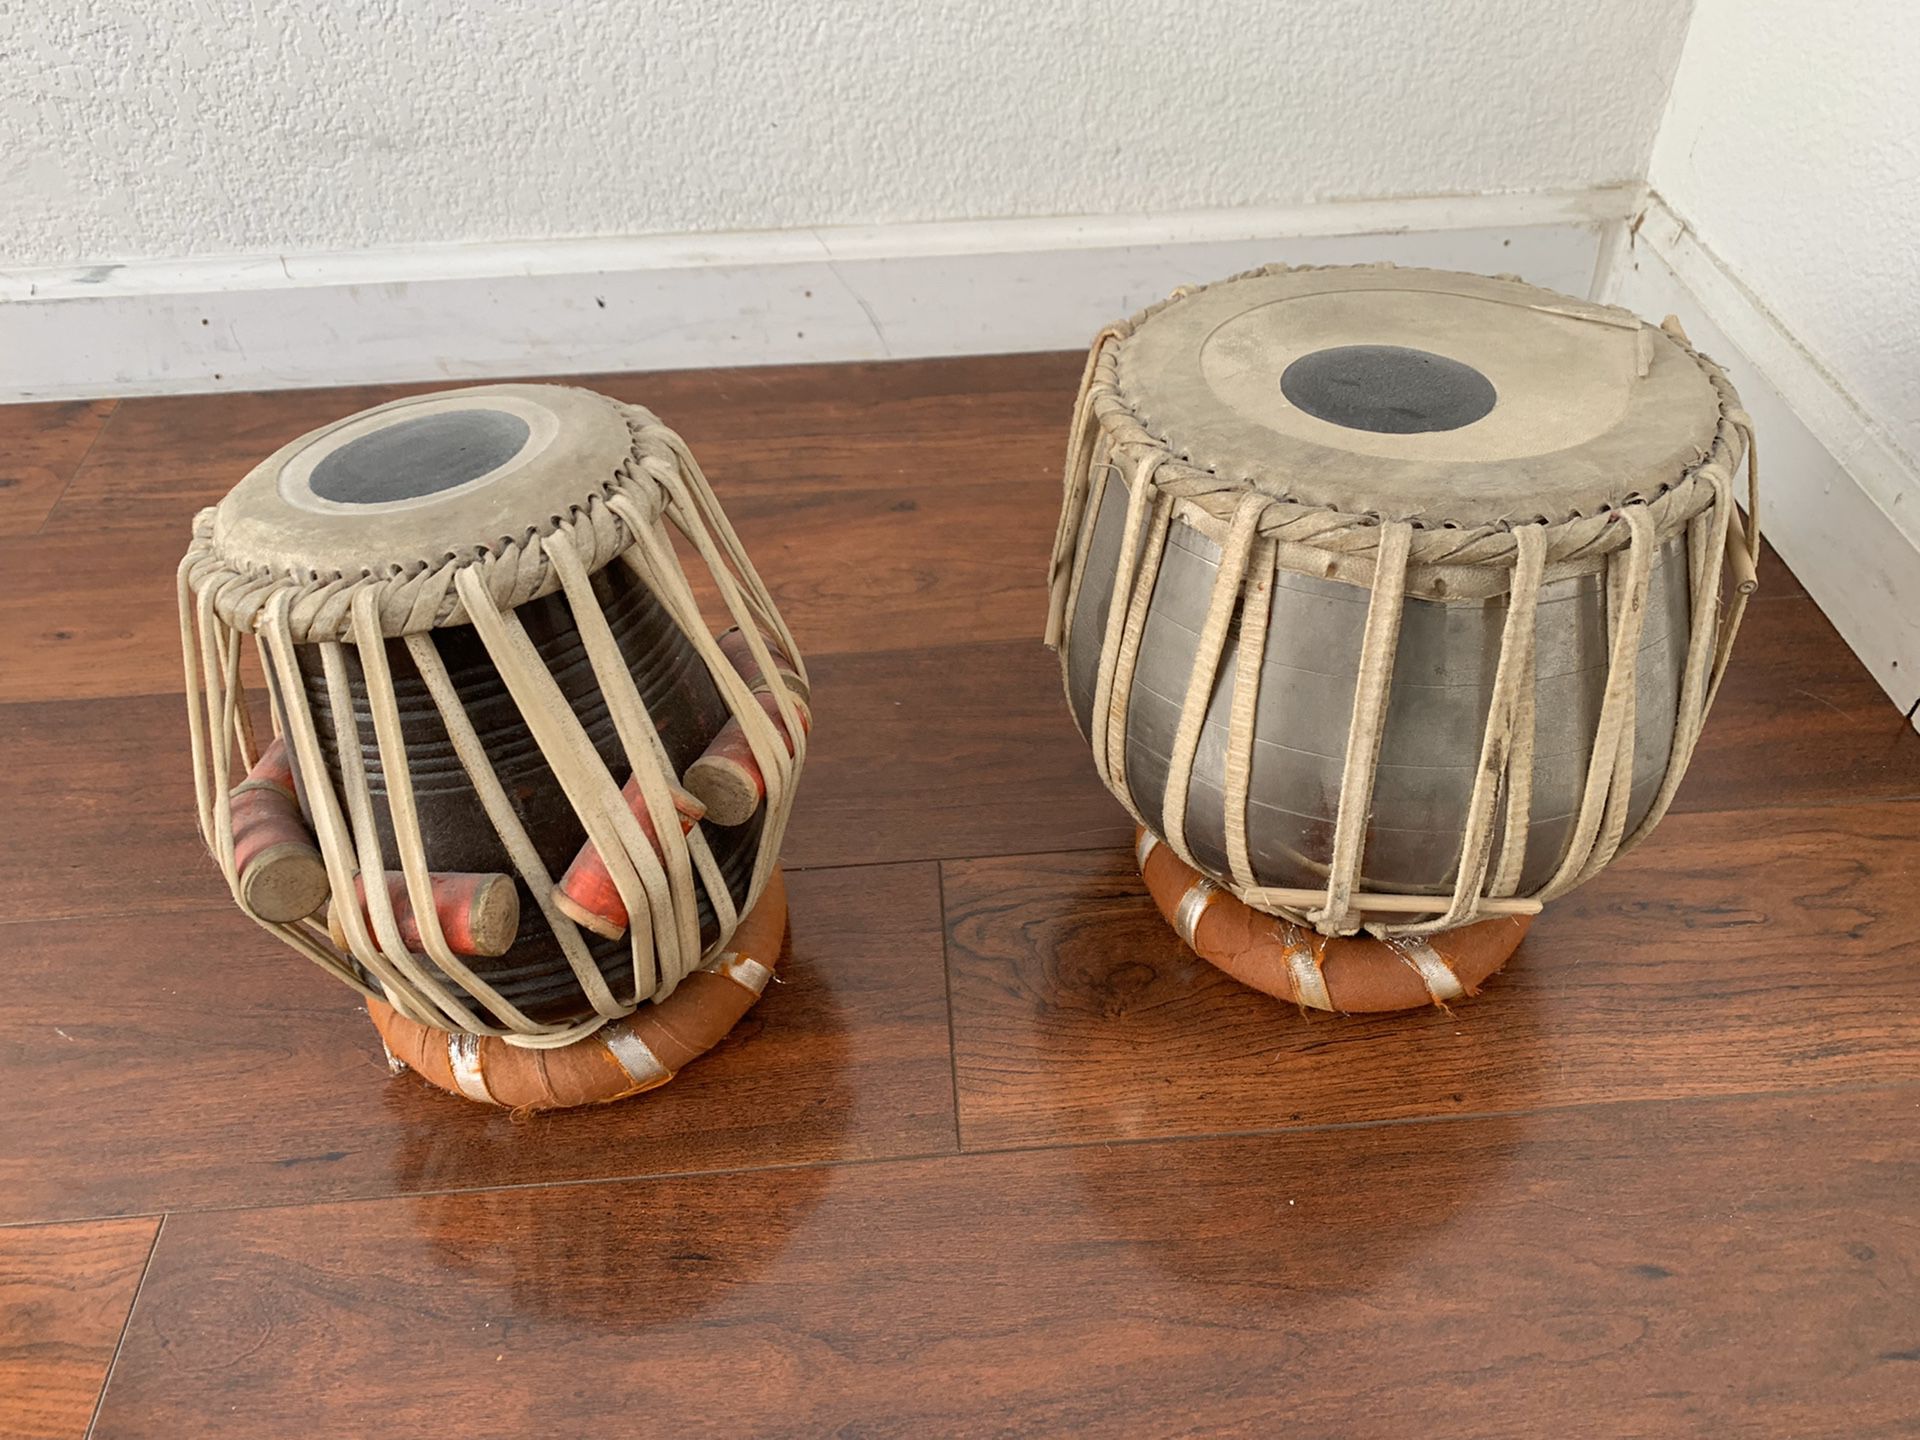 Tablas: tabla Indian drums